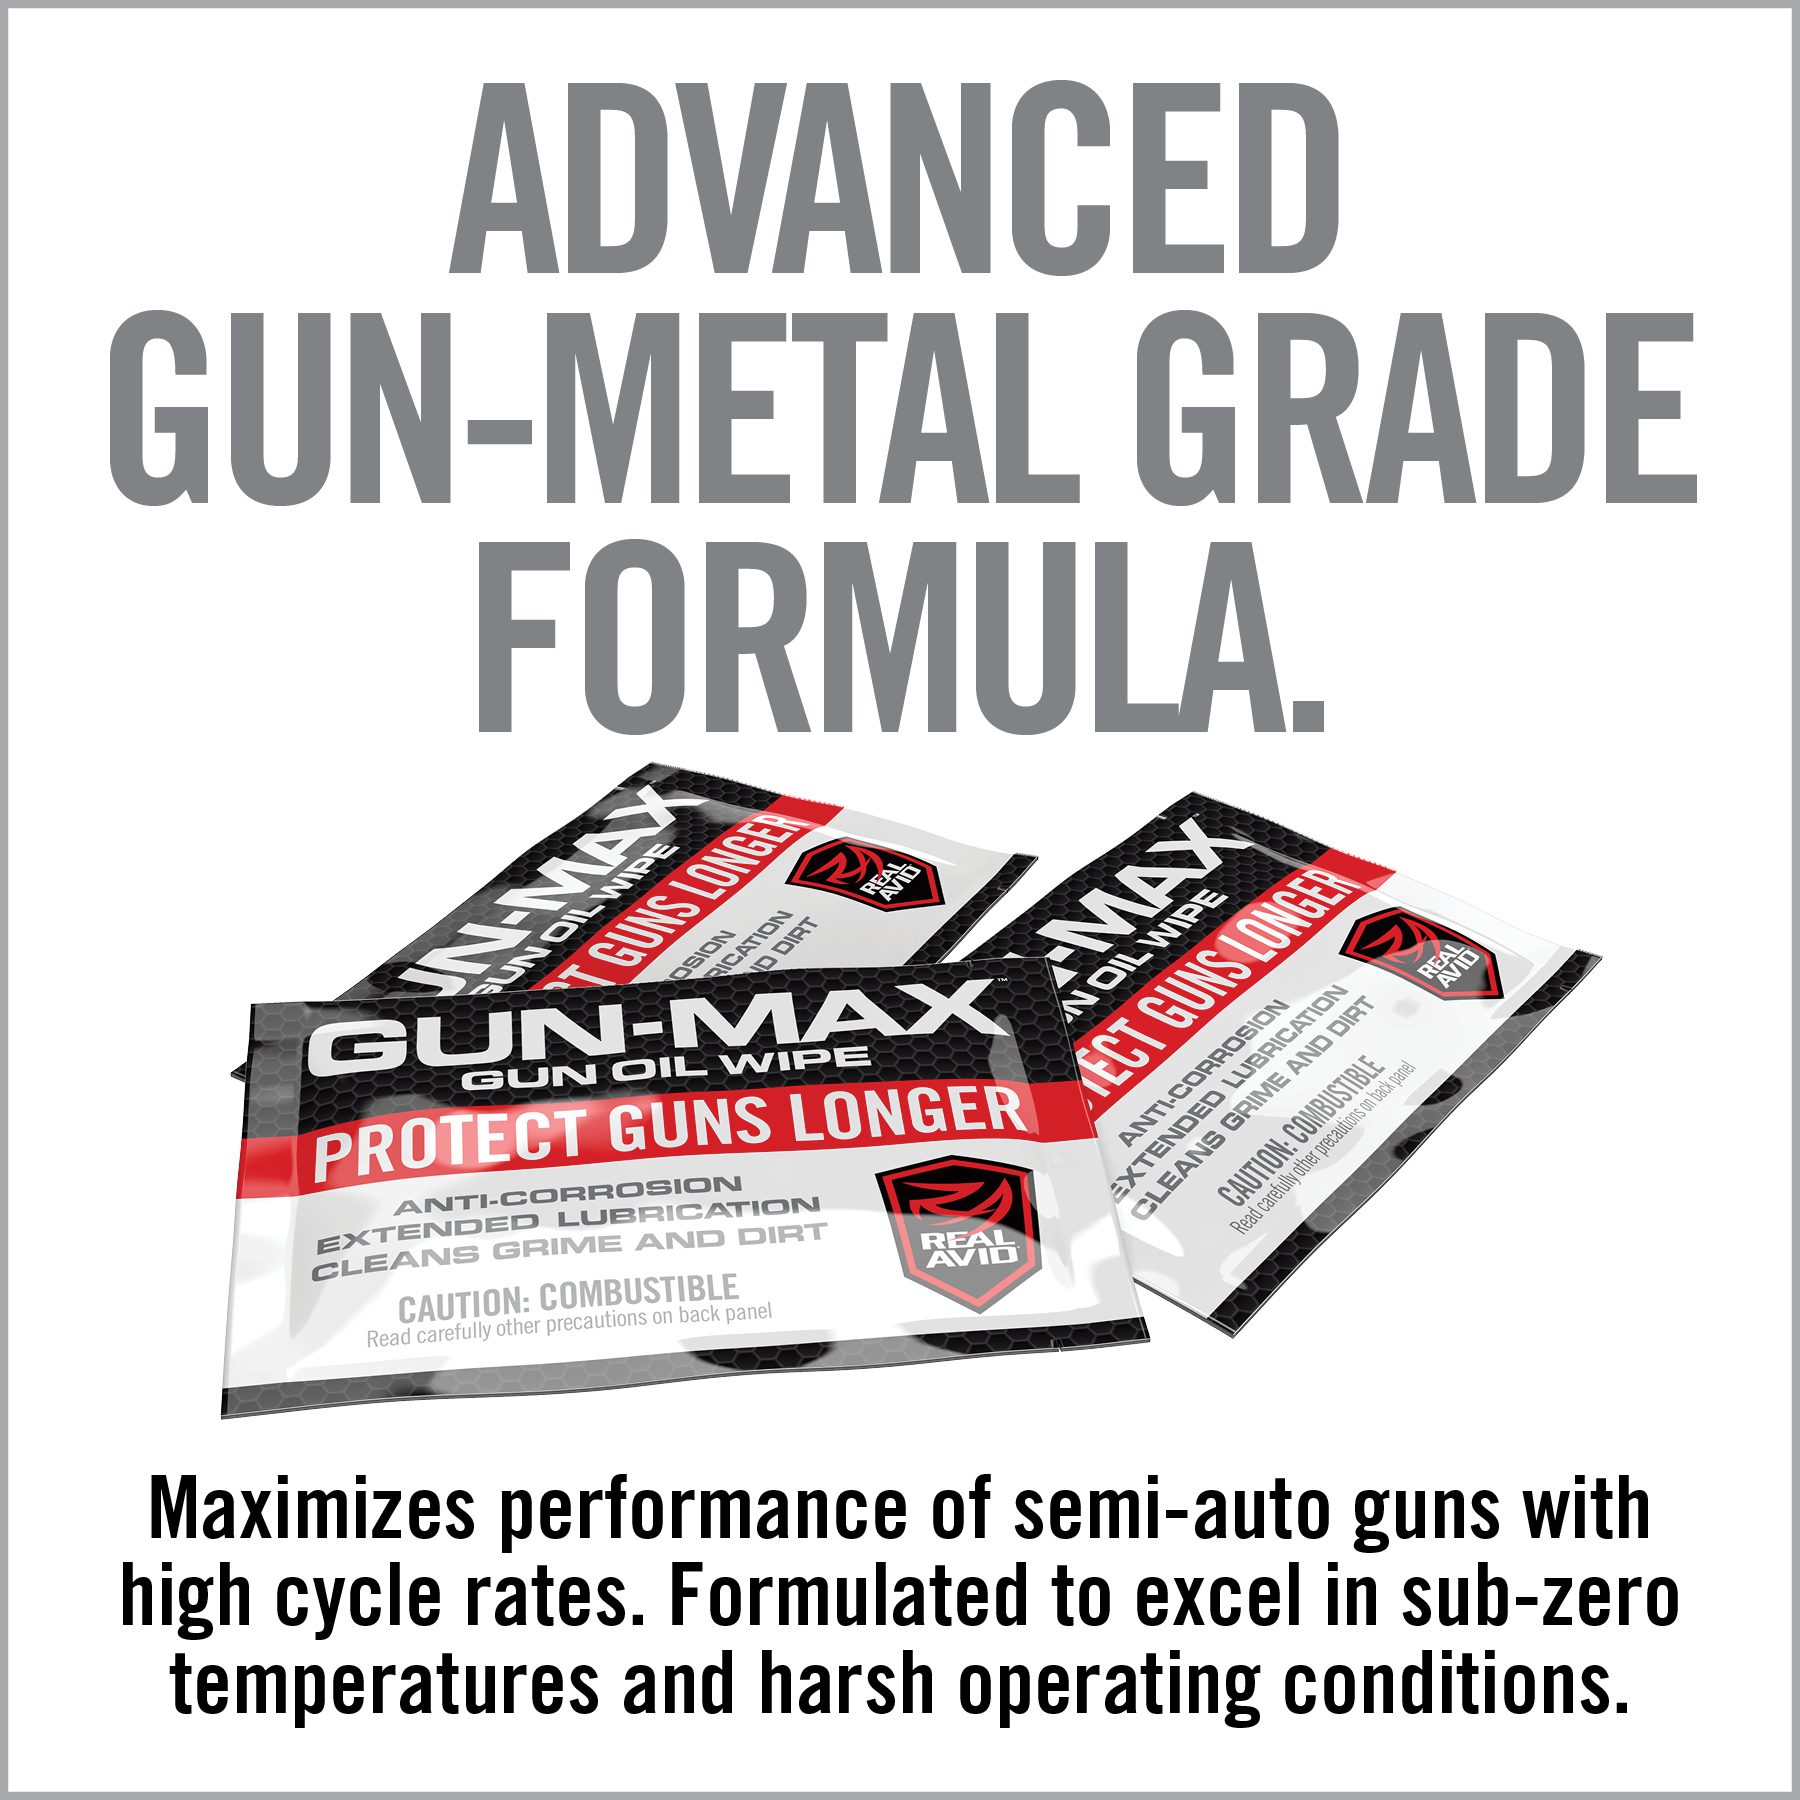 an ad for gun - metal grade formula